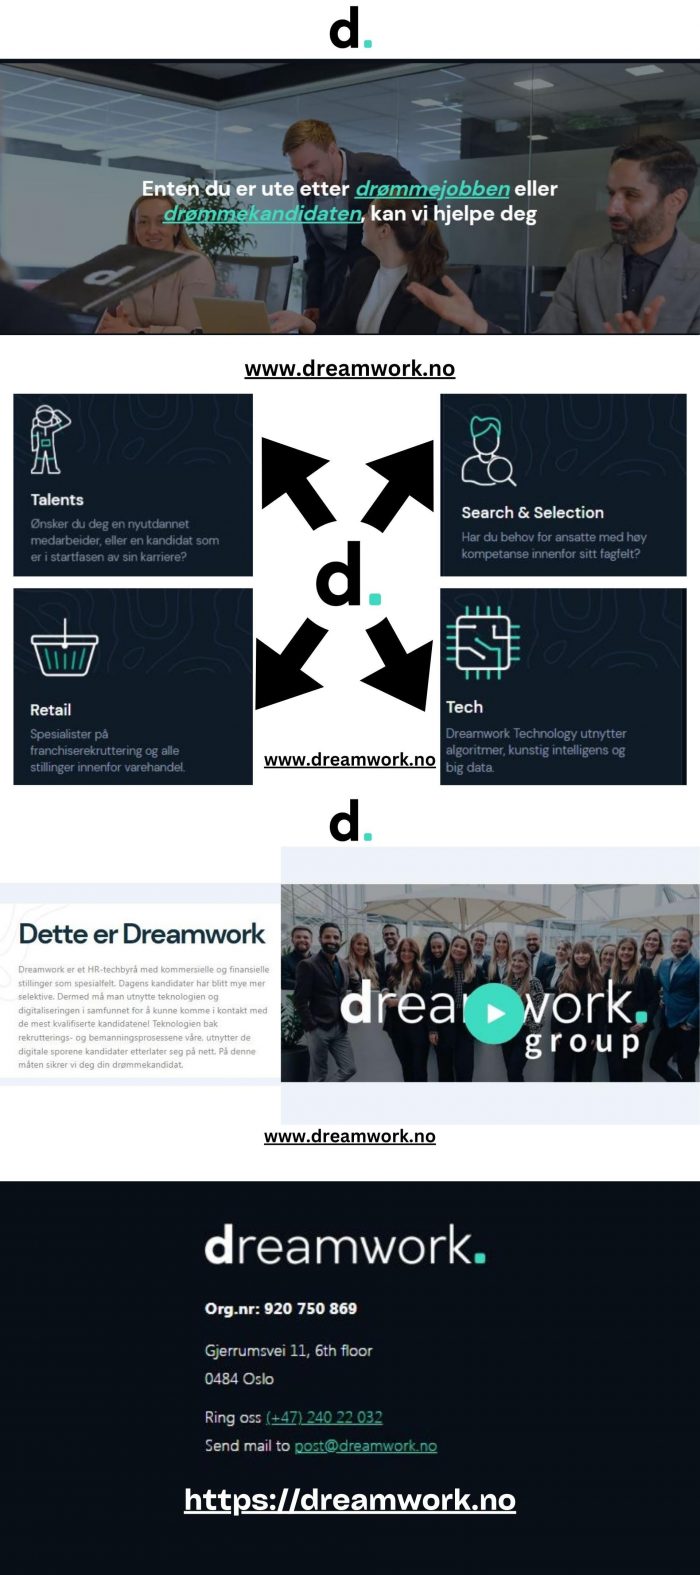 Dreamwork Group AS